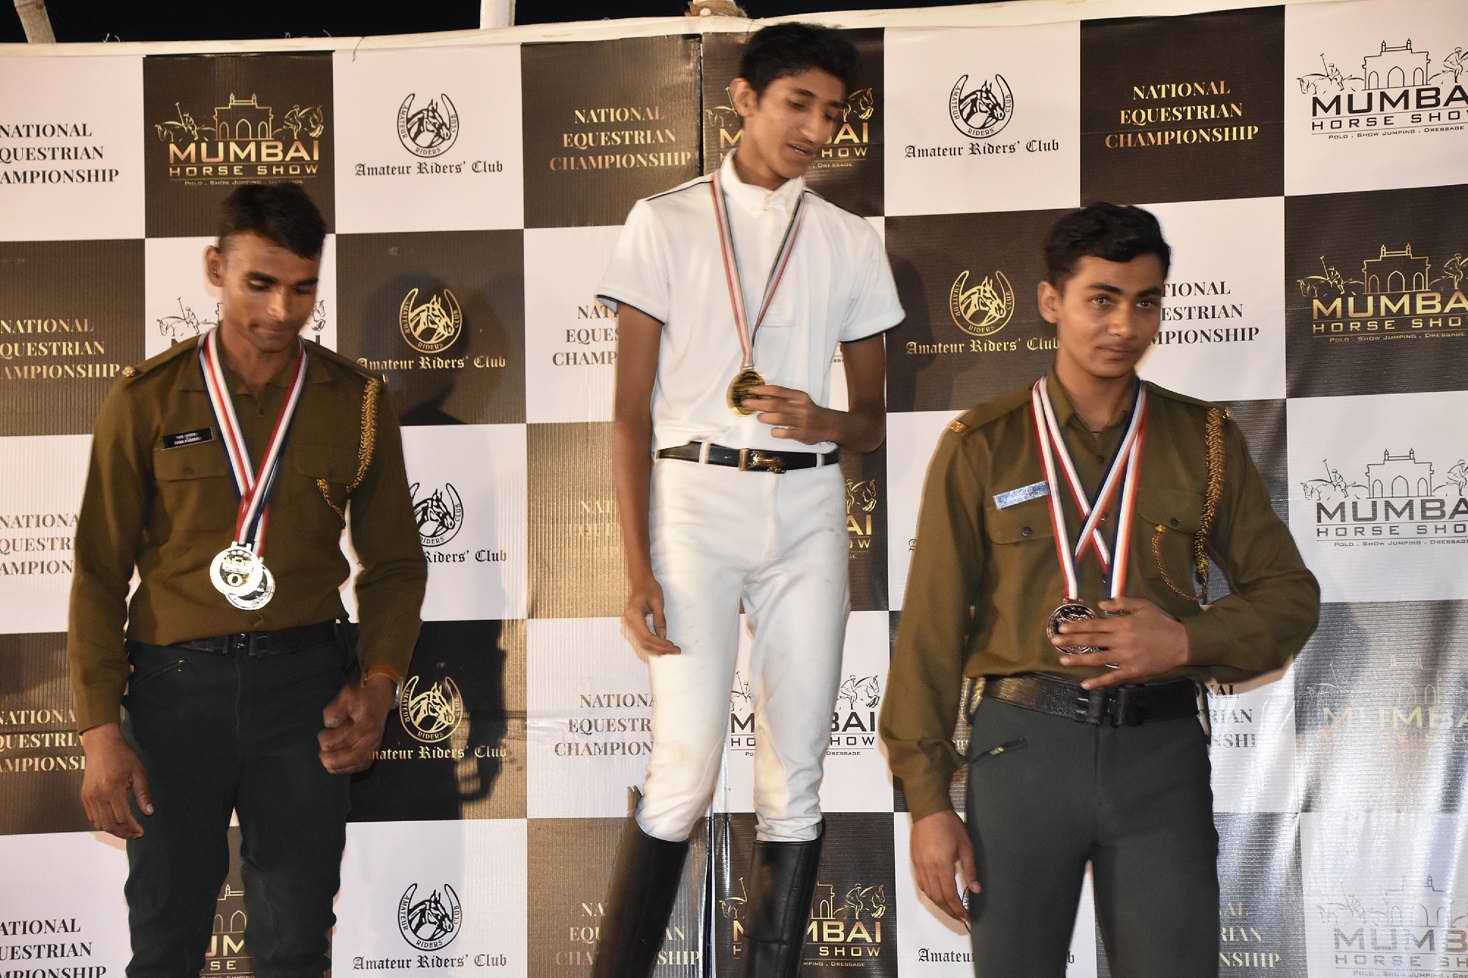 National Equestrian Championship winners